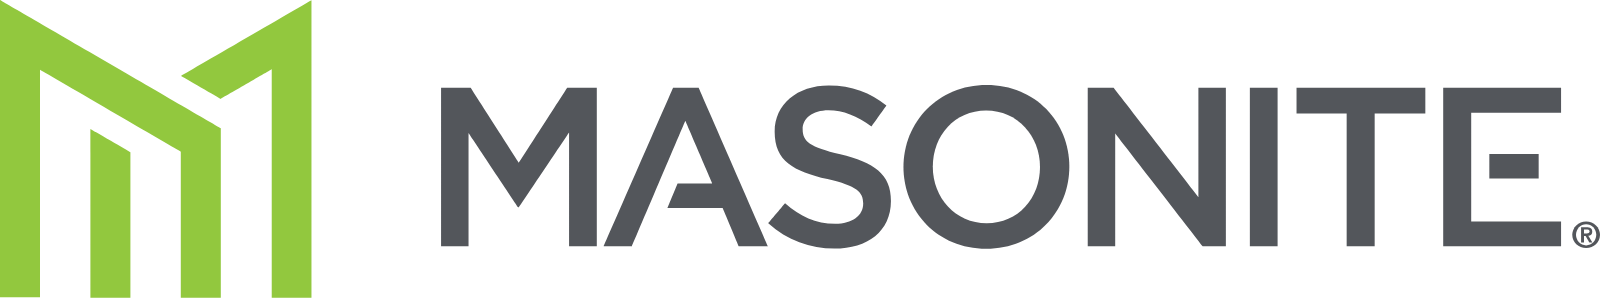 Masonite logo large (transparent PNG)